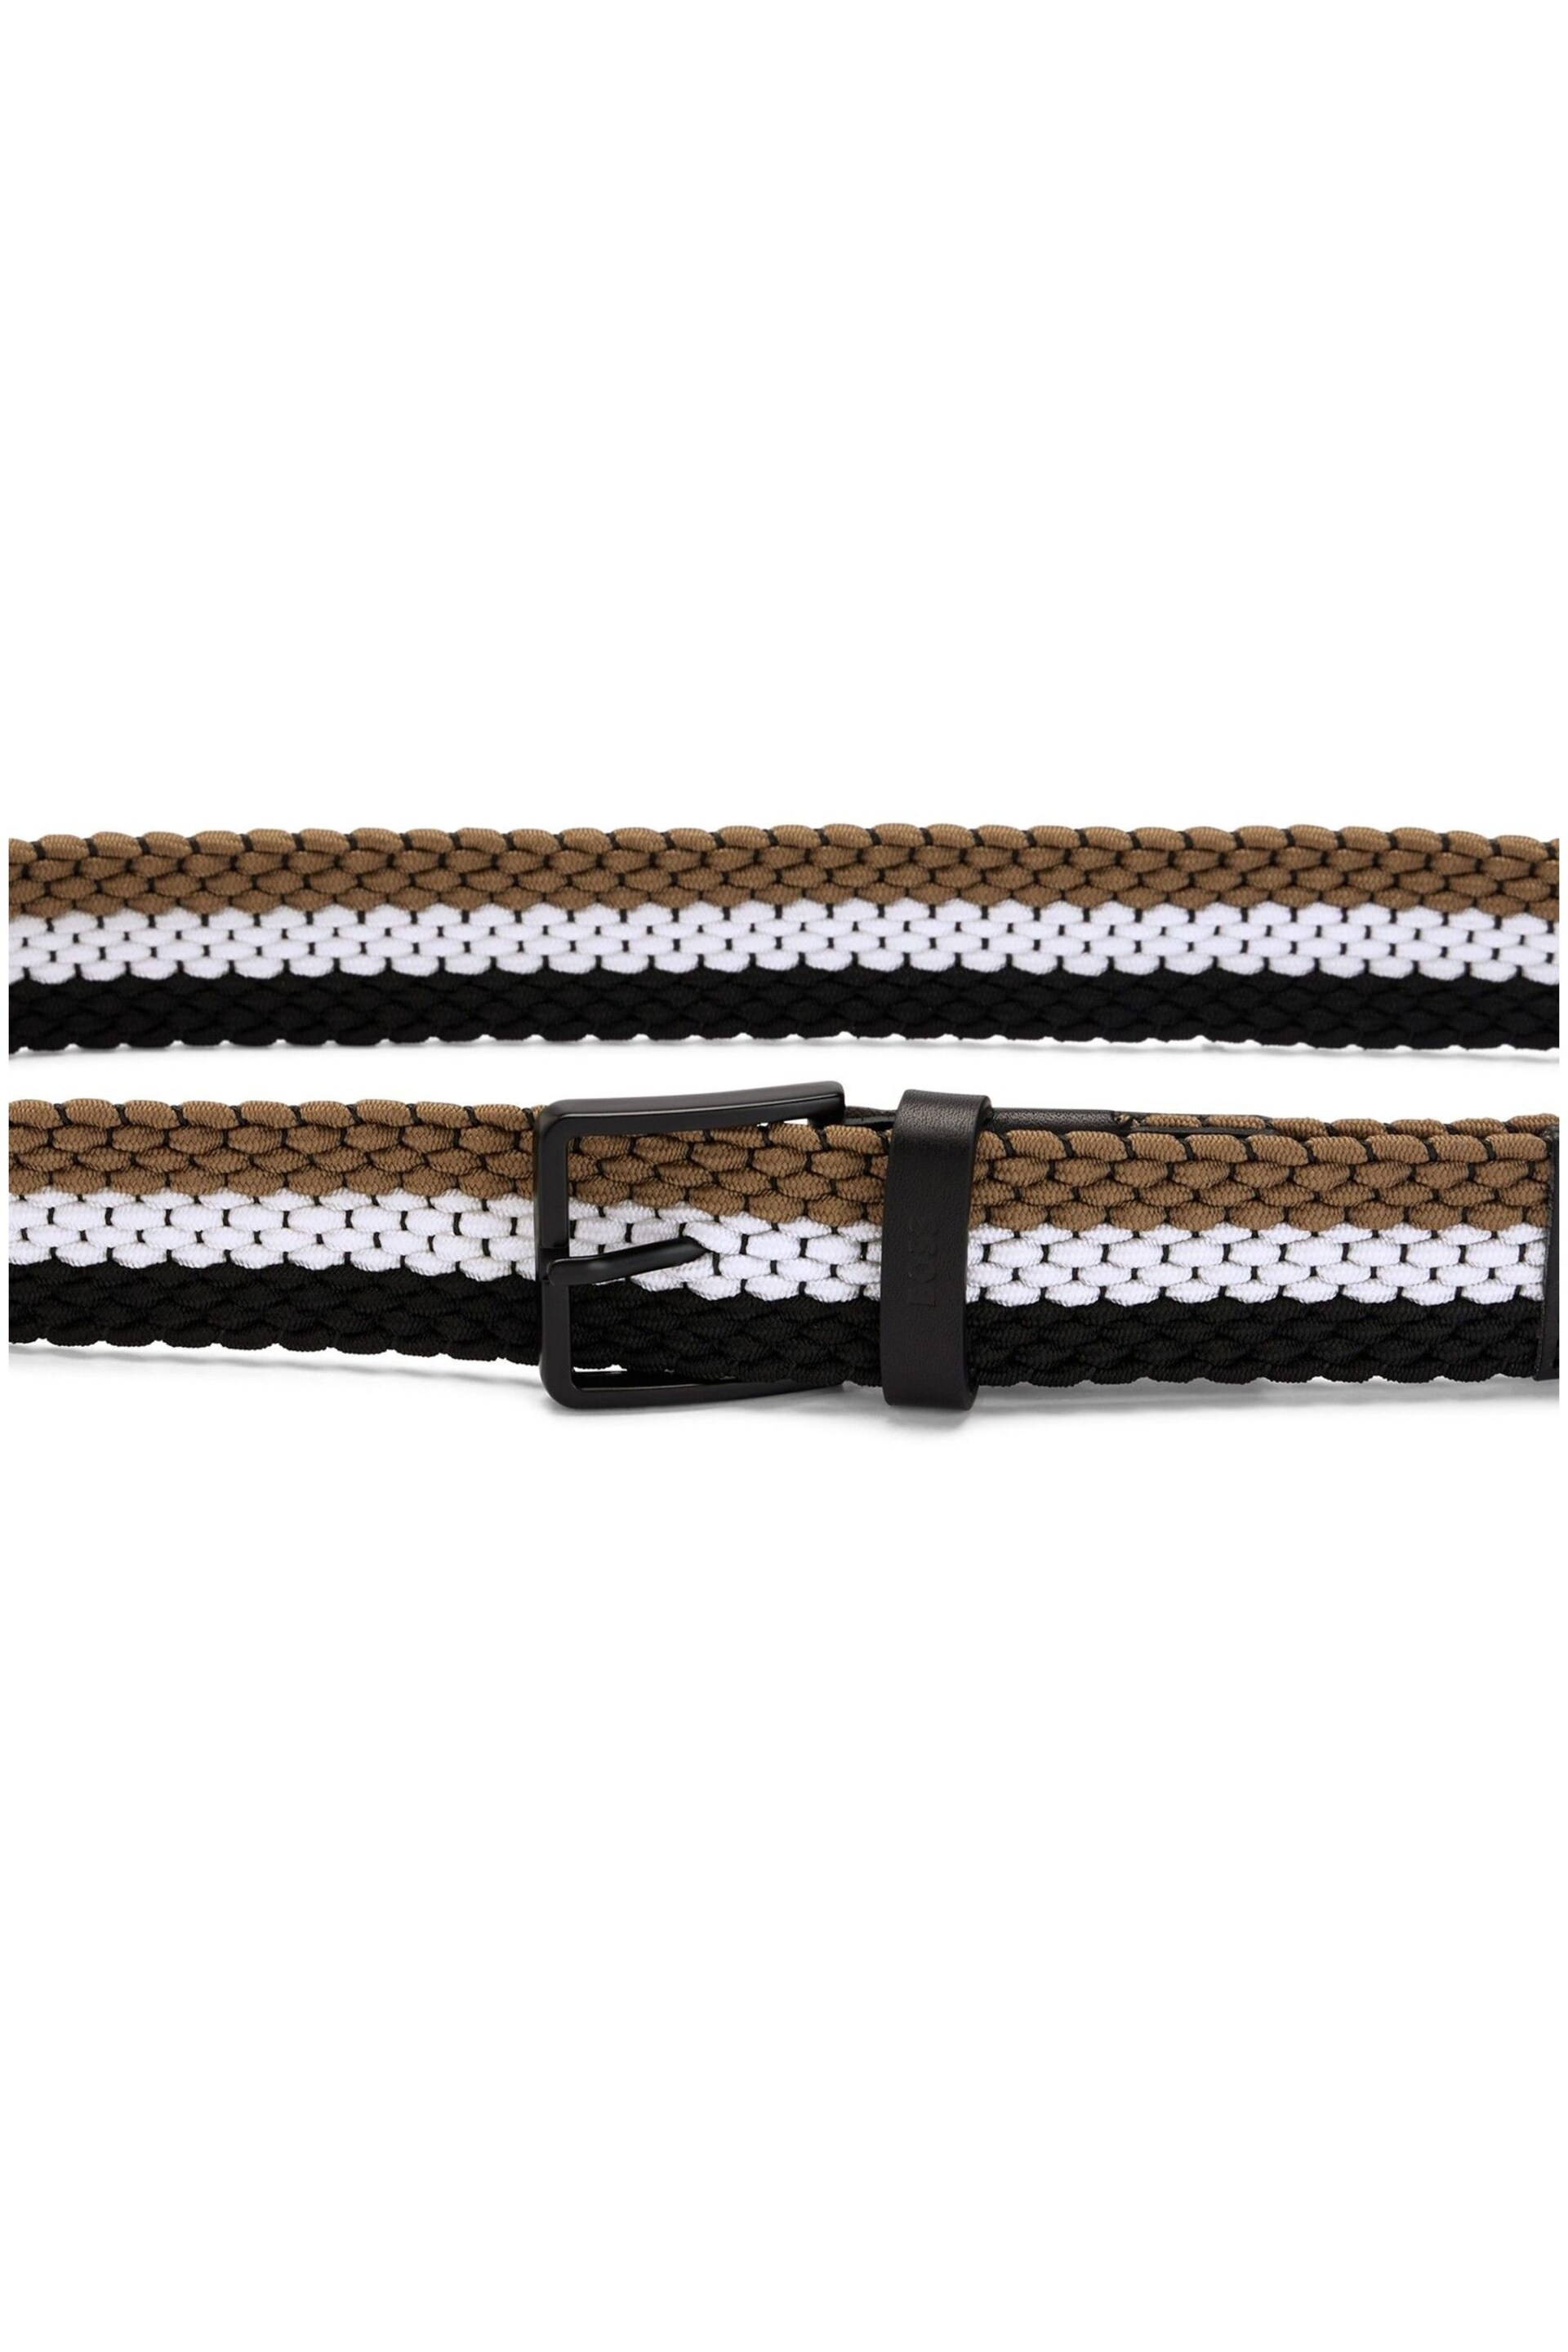 BOSS Black/Brown Signature Stripe Woven Textured Belt - Image 3 of 5